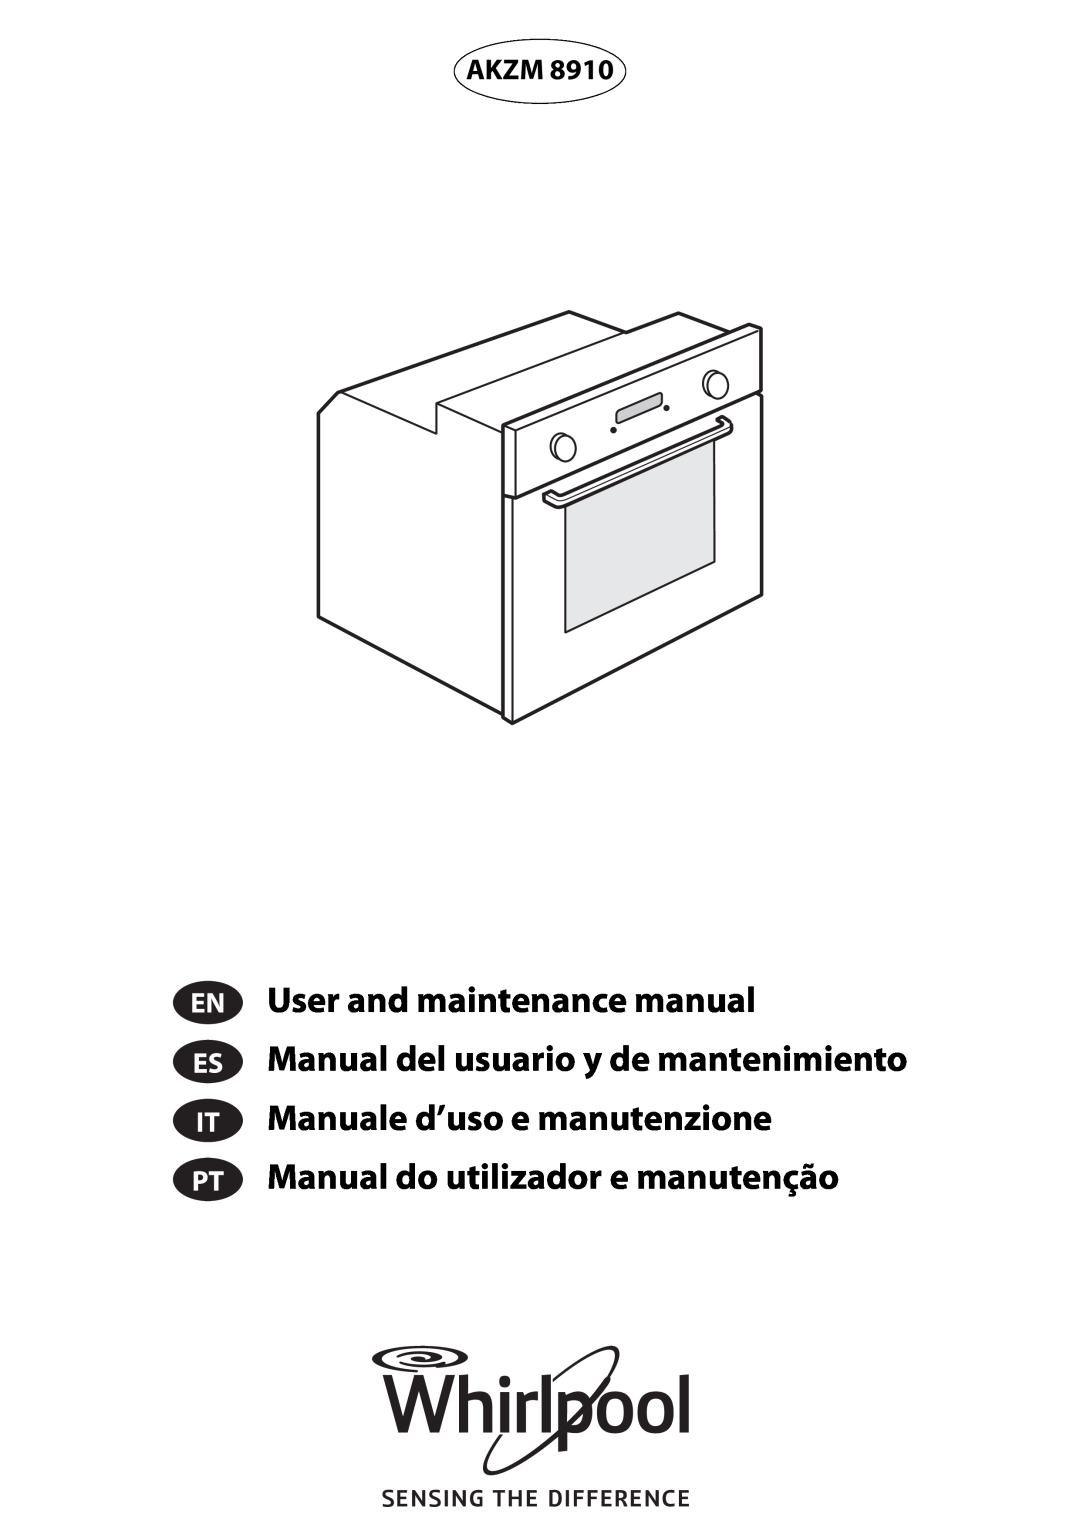 Whirlpool 8910 manual do utilizador User and maintenance manual, Akzm, En It 